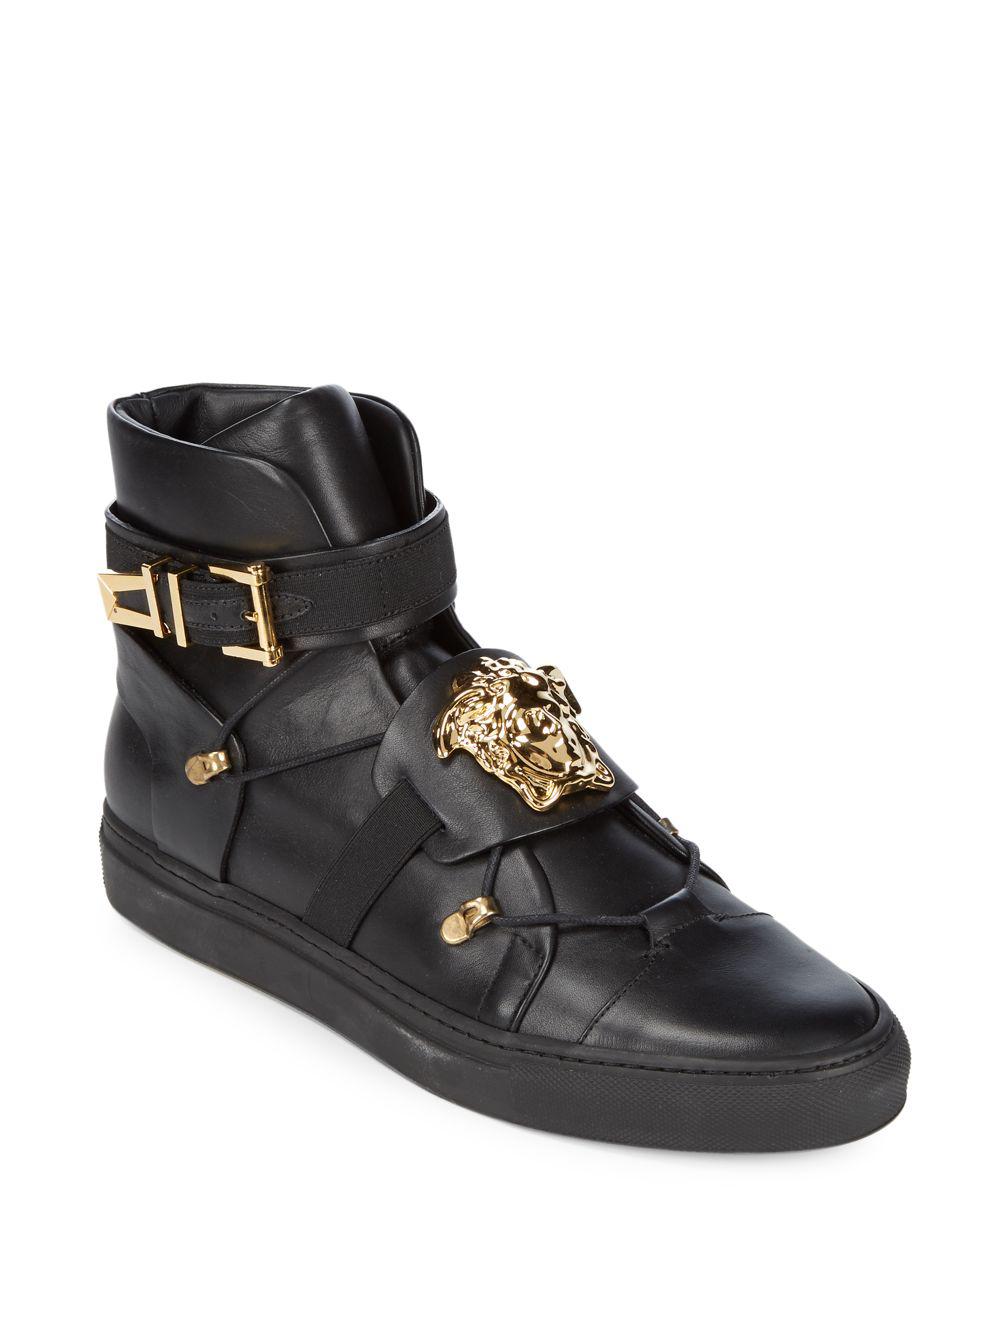 Versace Vitello Leather Sneakers in 